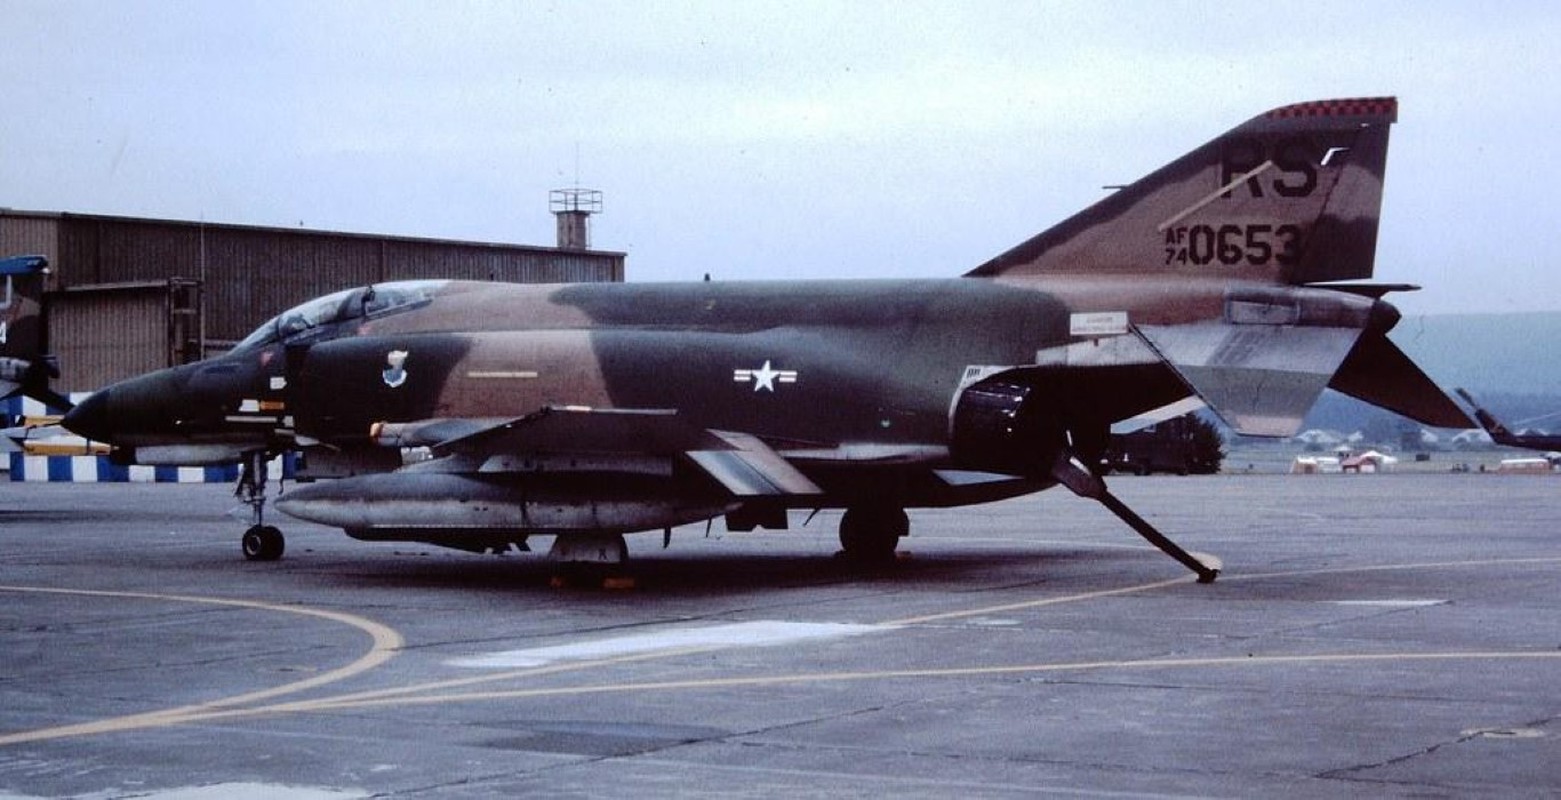 F-4E Phantom II, cu sua sai cua My sau khi rung toi ta tren bau troi Viet Nam-Hinh-18